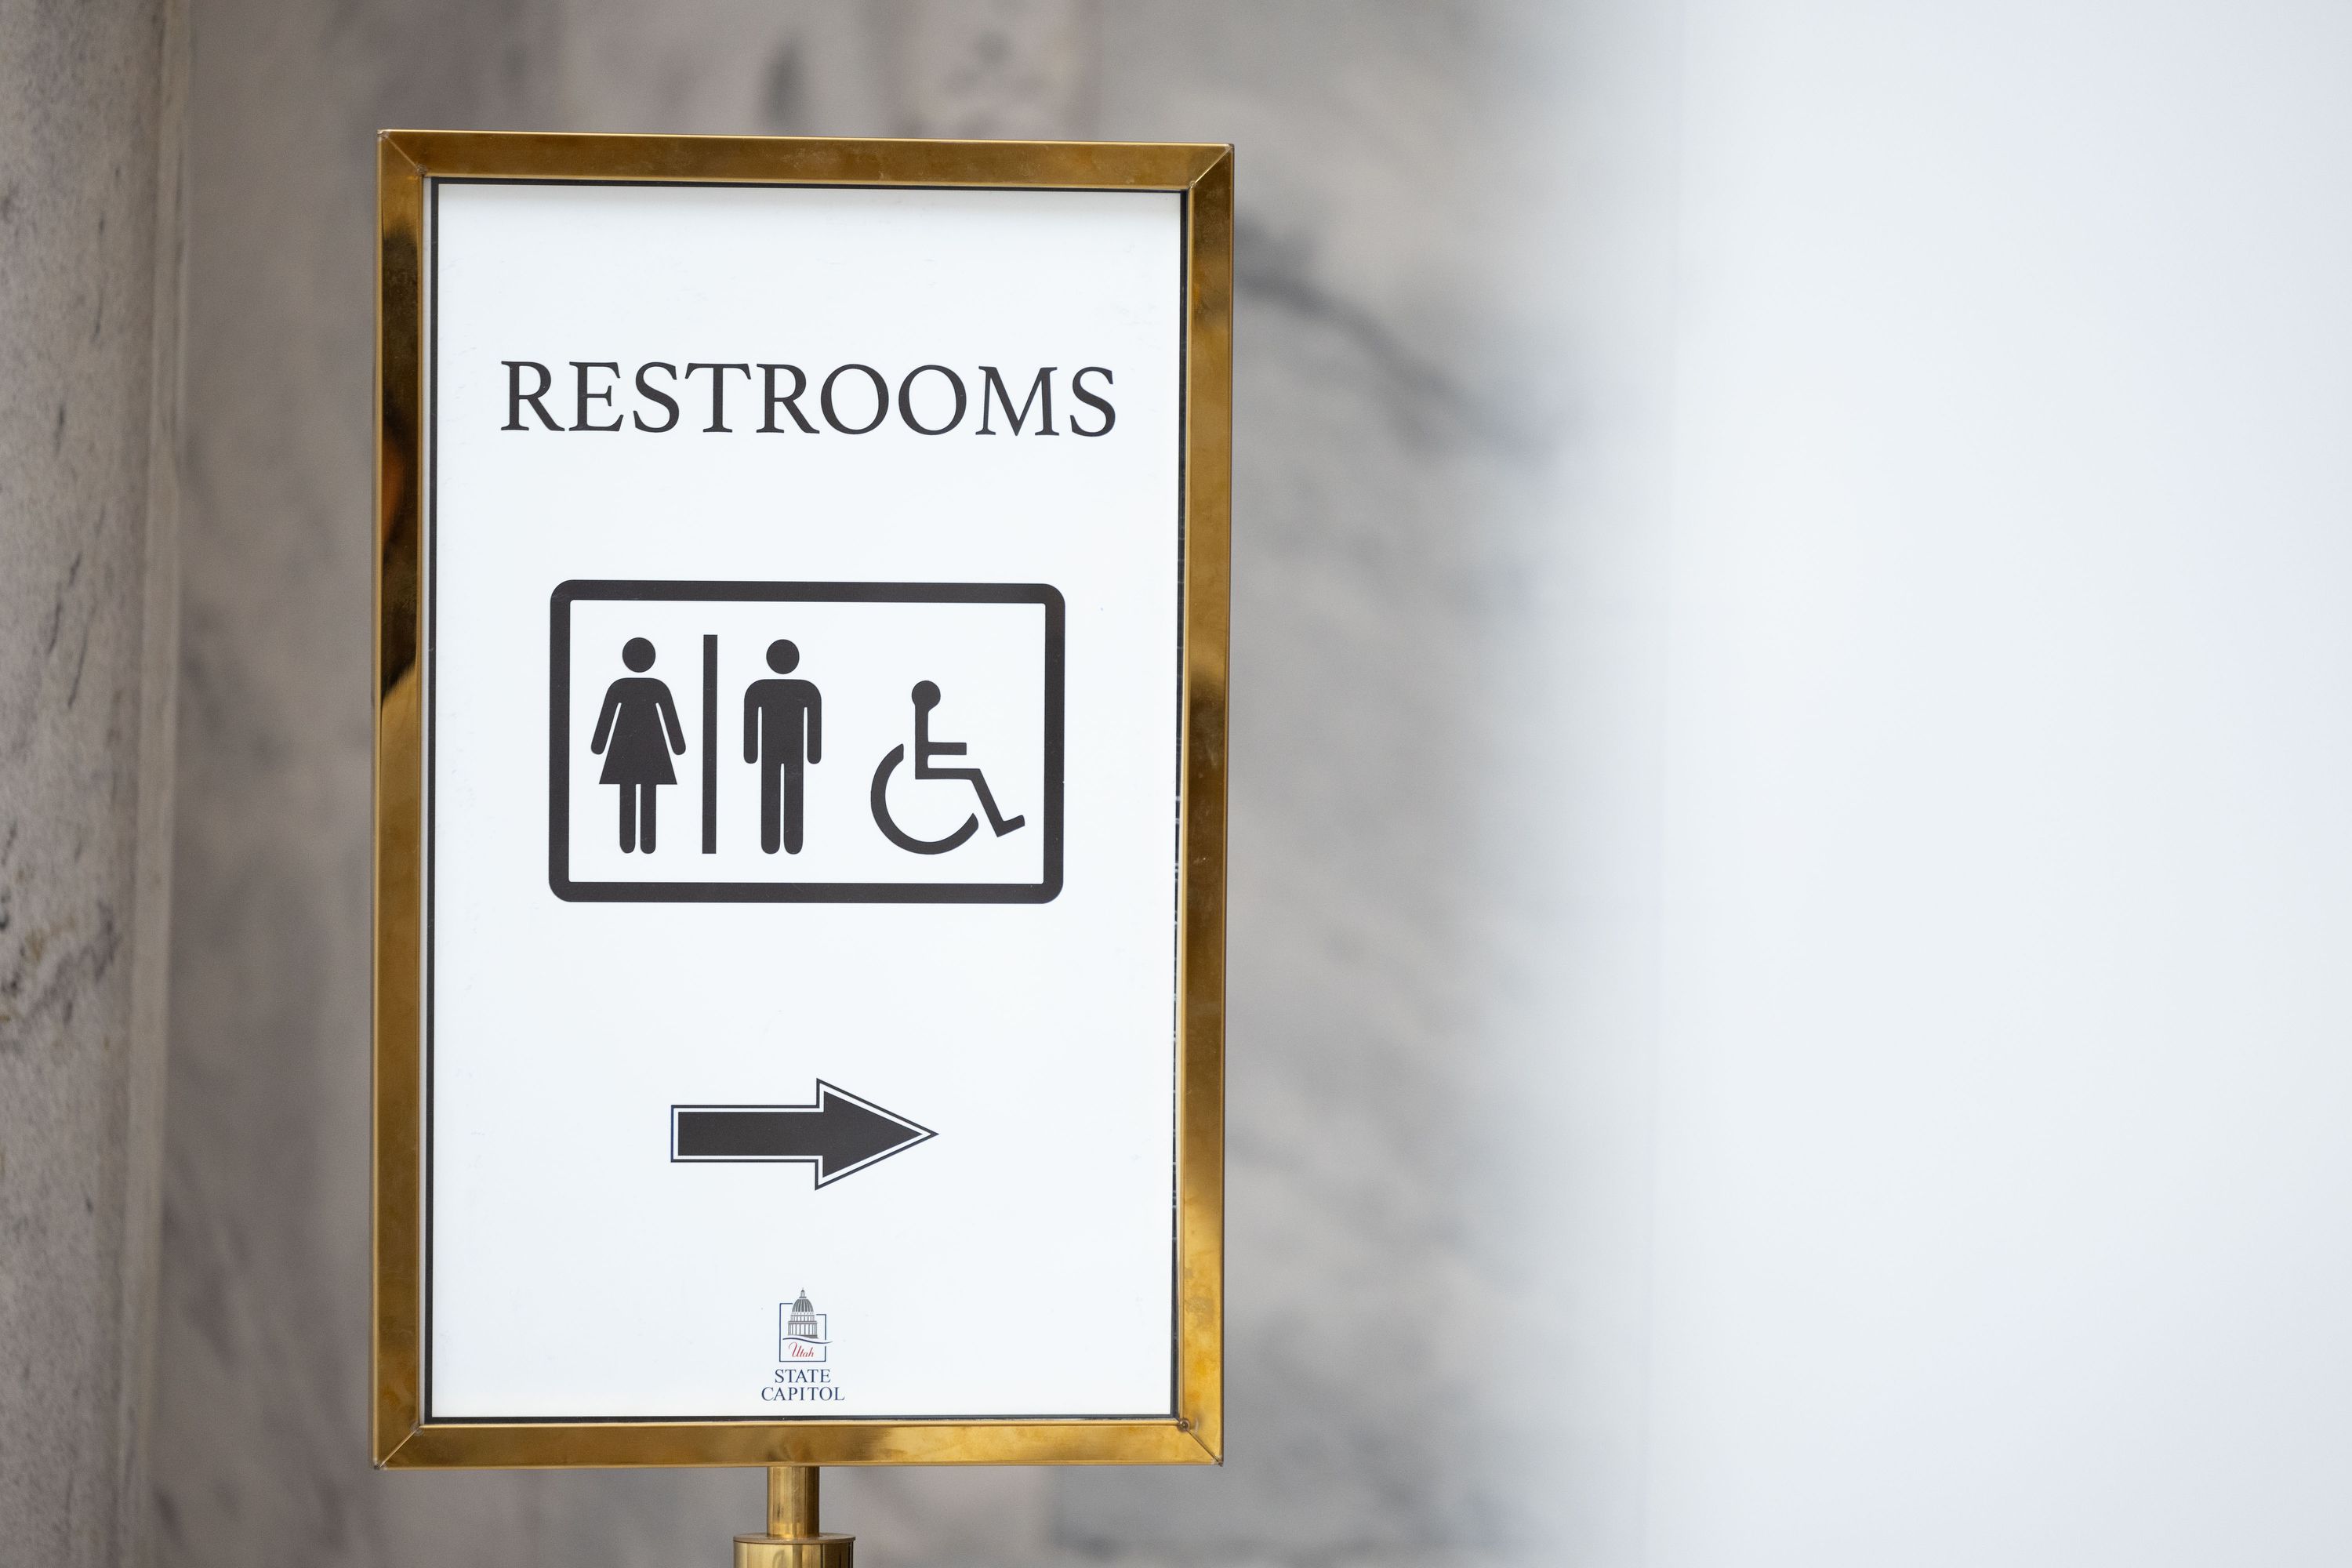 utah legislature gives final approval to transgender bathroom bill after last-minute tweaks